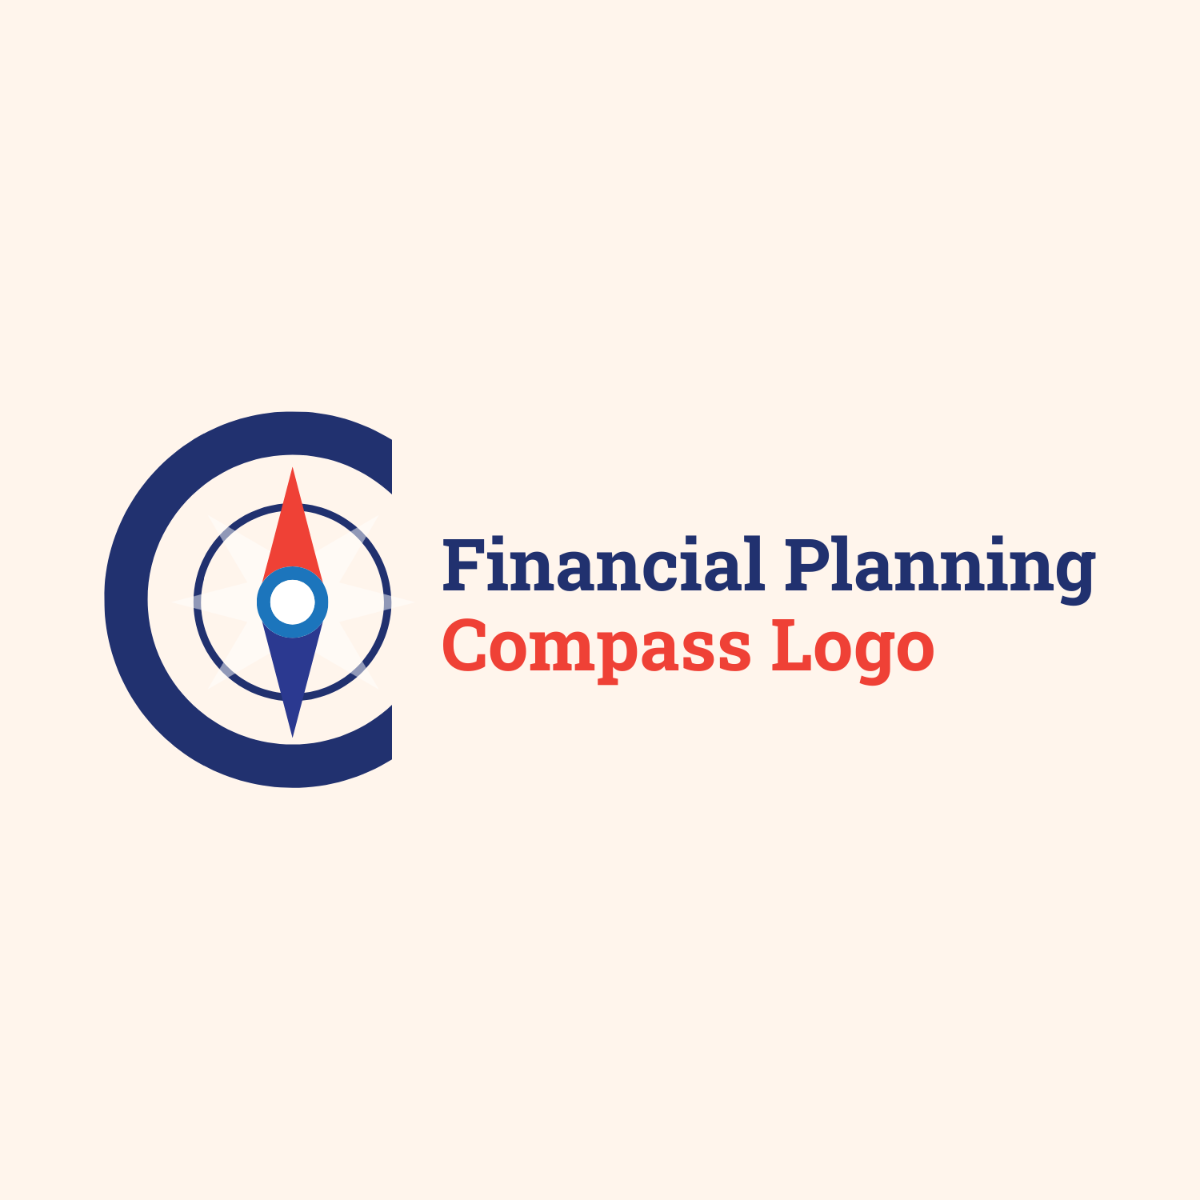 Financial Planning Compass Logo Template